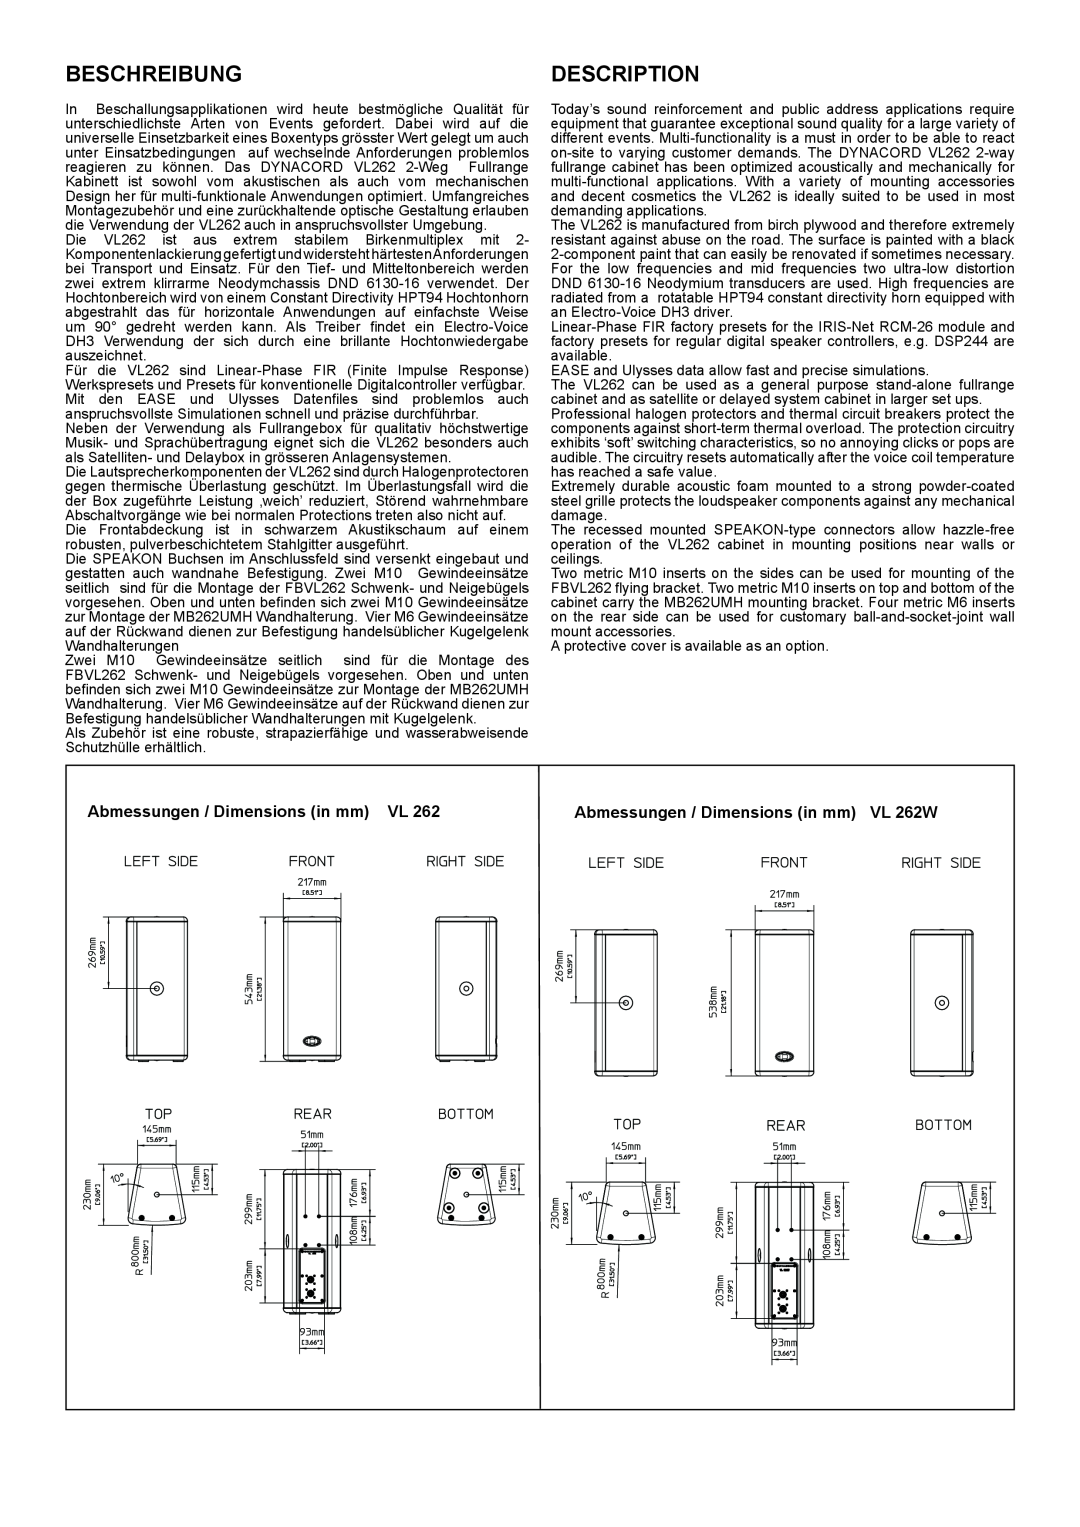 Dynacord VL262 specifications Beschreibung, Description, Abmessungen / Dimensions in mm VL 262W 